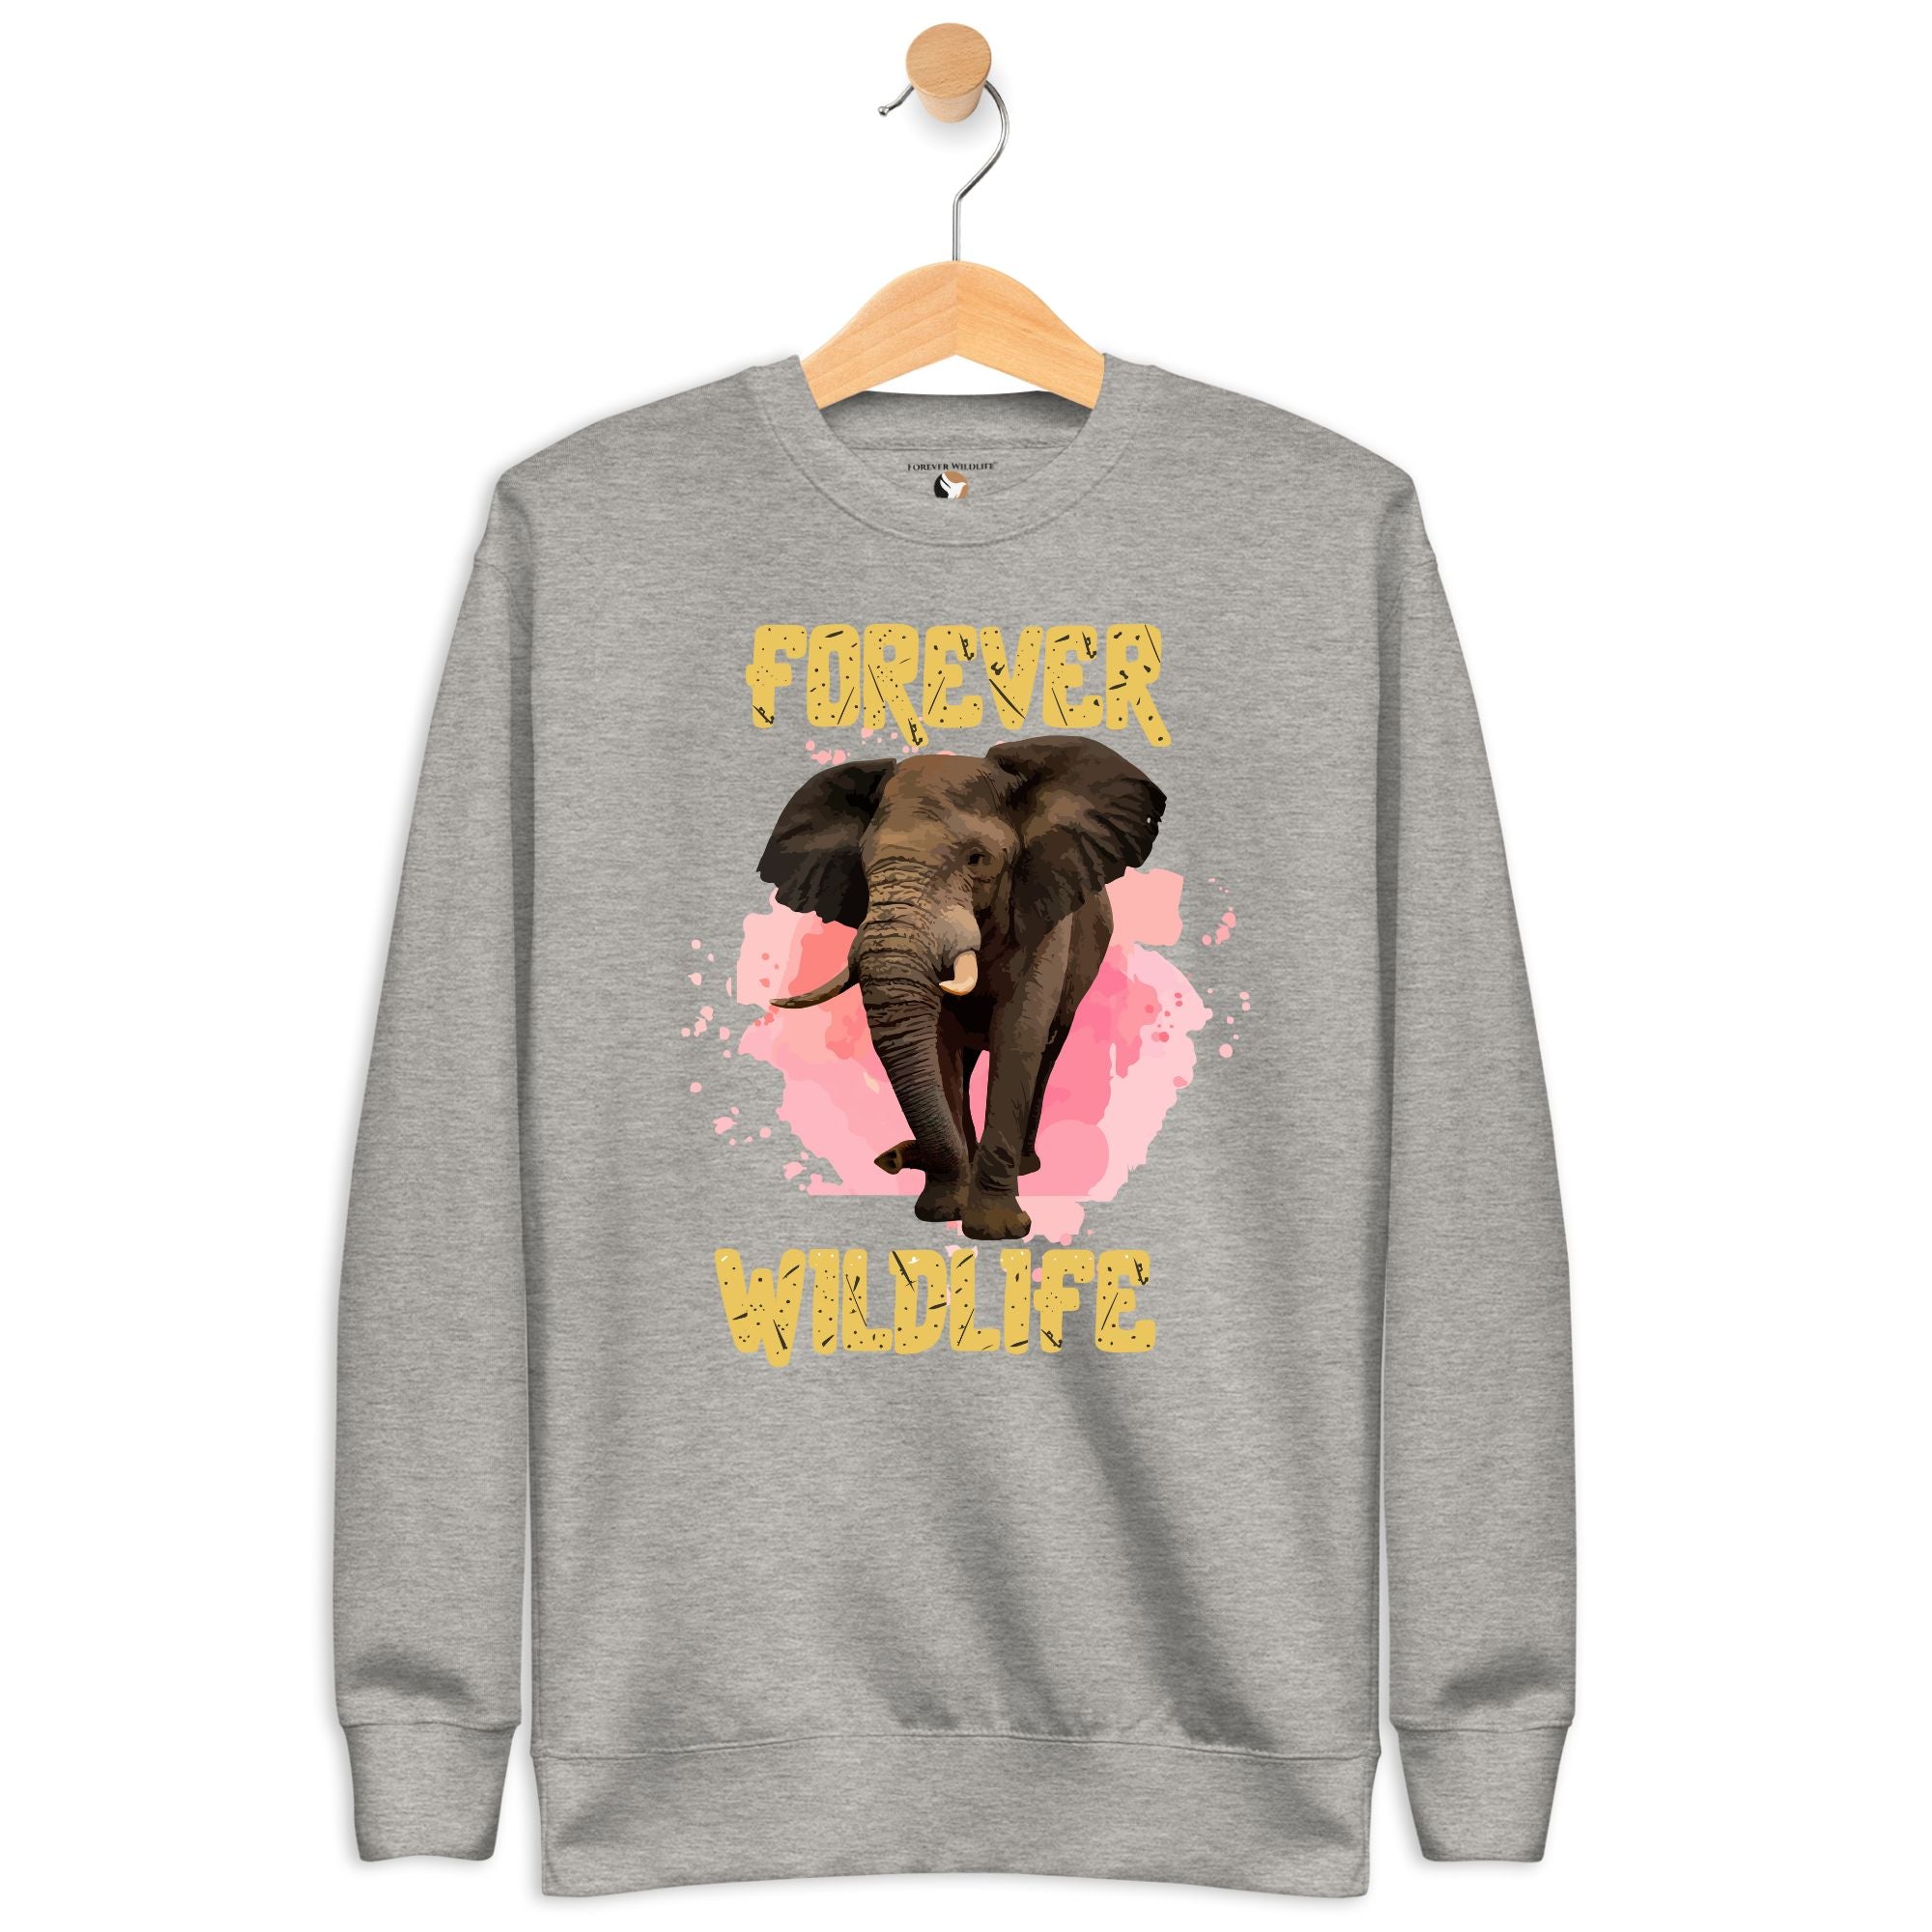 Elephant Sweatshirt in Grey-Premium Wildlife Animal Inspiration Sweatshirt Design, part of Wildlife Sweatshirts & Clothing from Forever Wildlife.